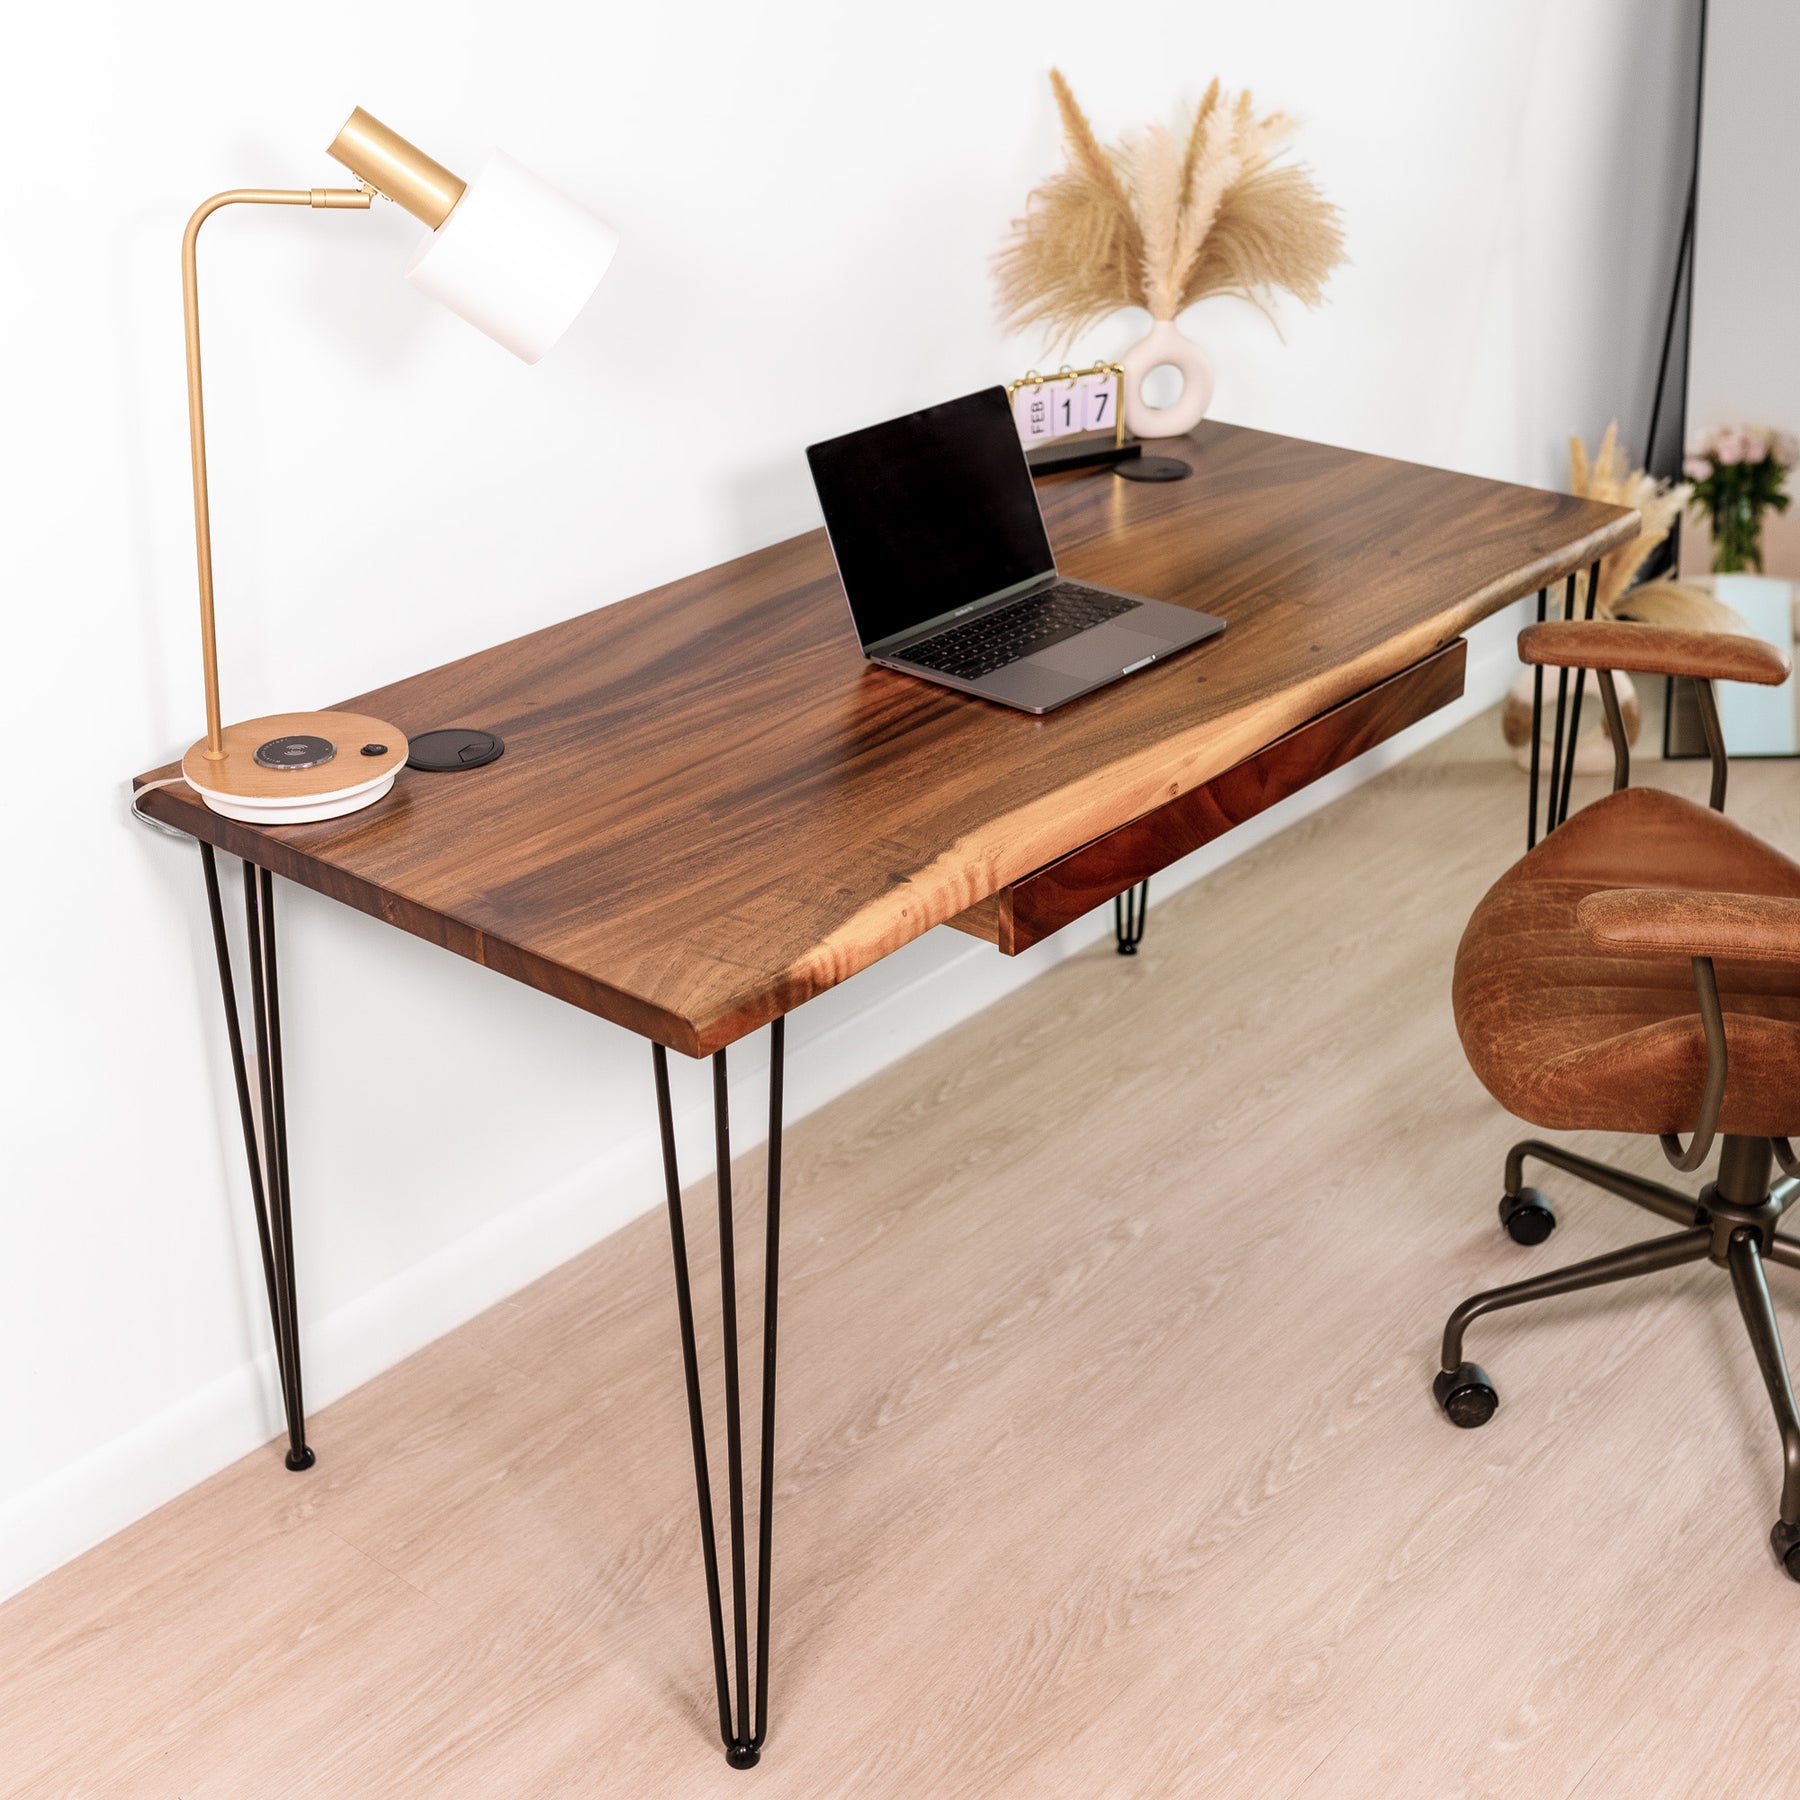 Computer Desk with Storage - Live Edge Walnut Desk, Home Office Desk